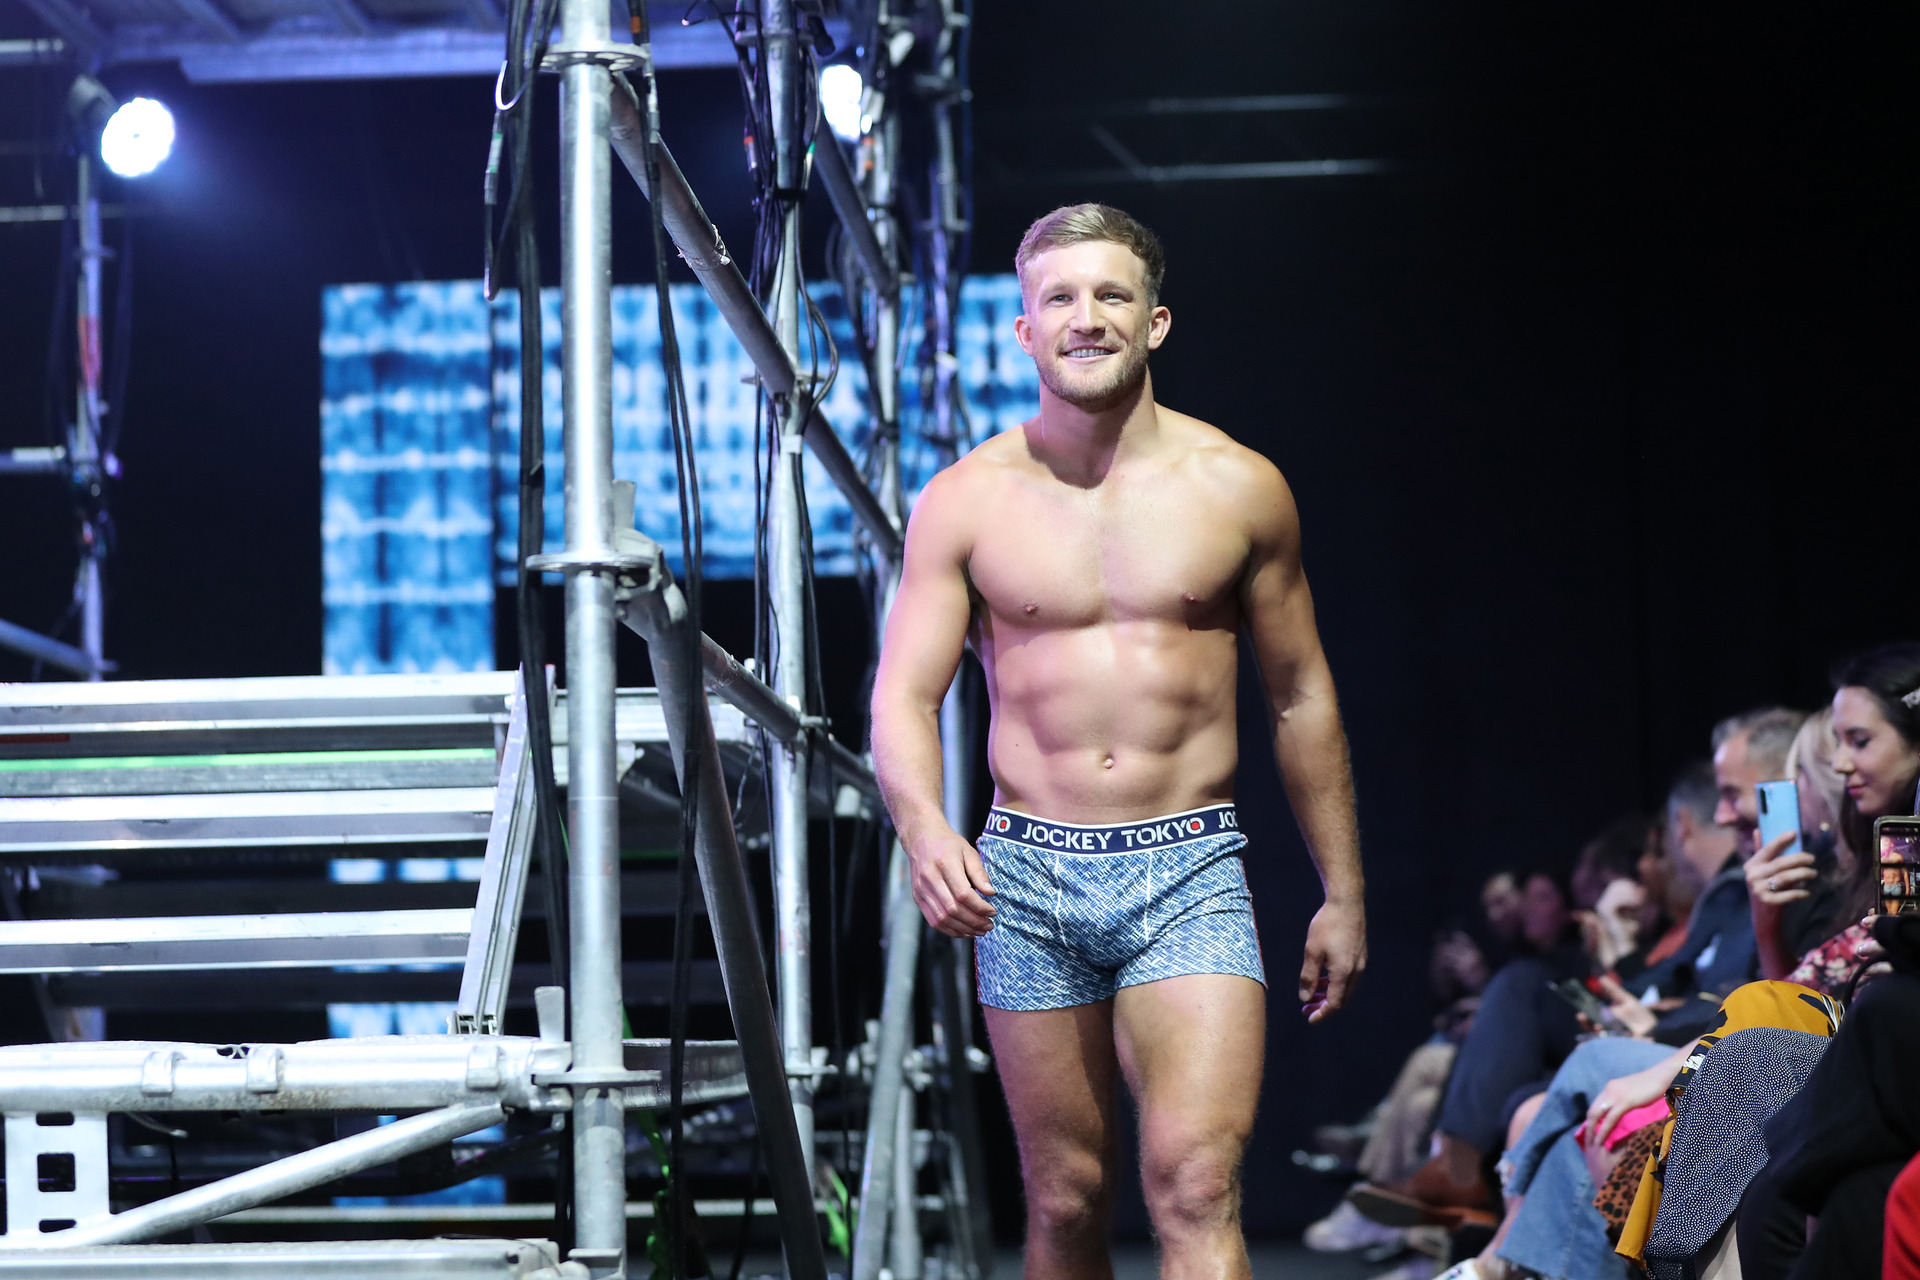 See Jockey Underwear showcase with Rugby Athletes at Zealand Fashion Week  2017, by fashionablymale.net